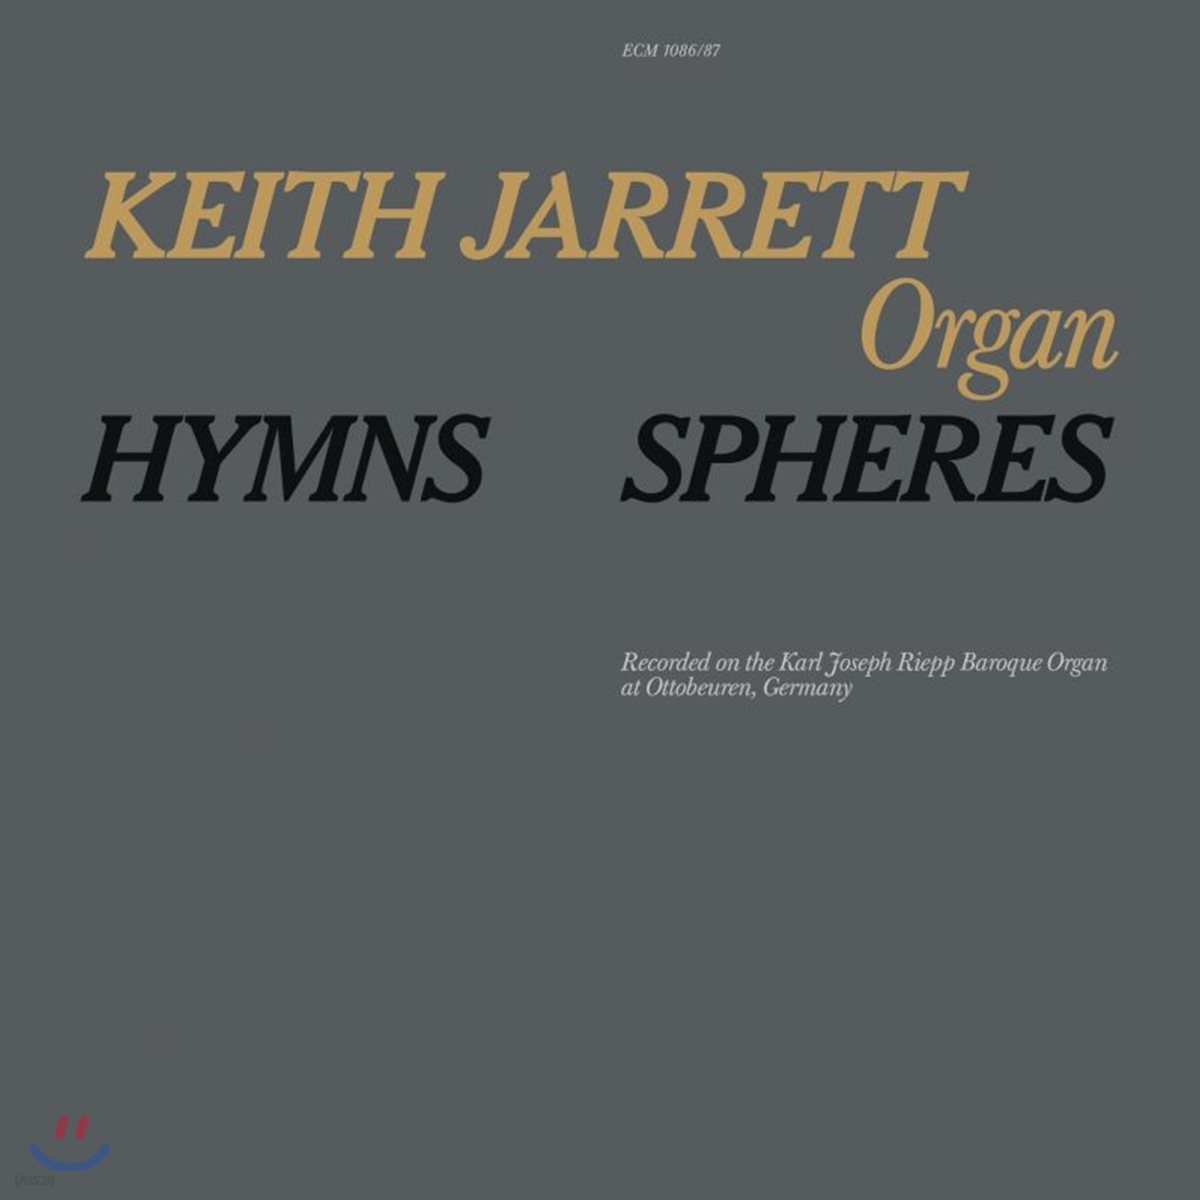 Keith Jarrett - Hymns Spheres 키스 자렛 바로크 오르간 연주집 [2LP]